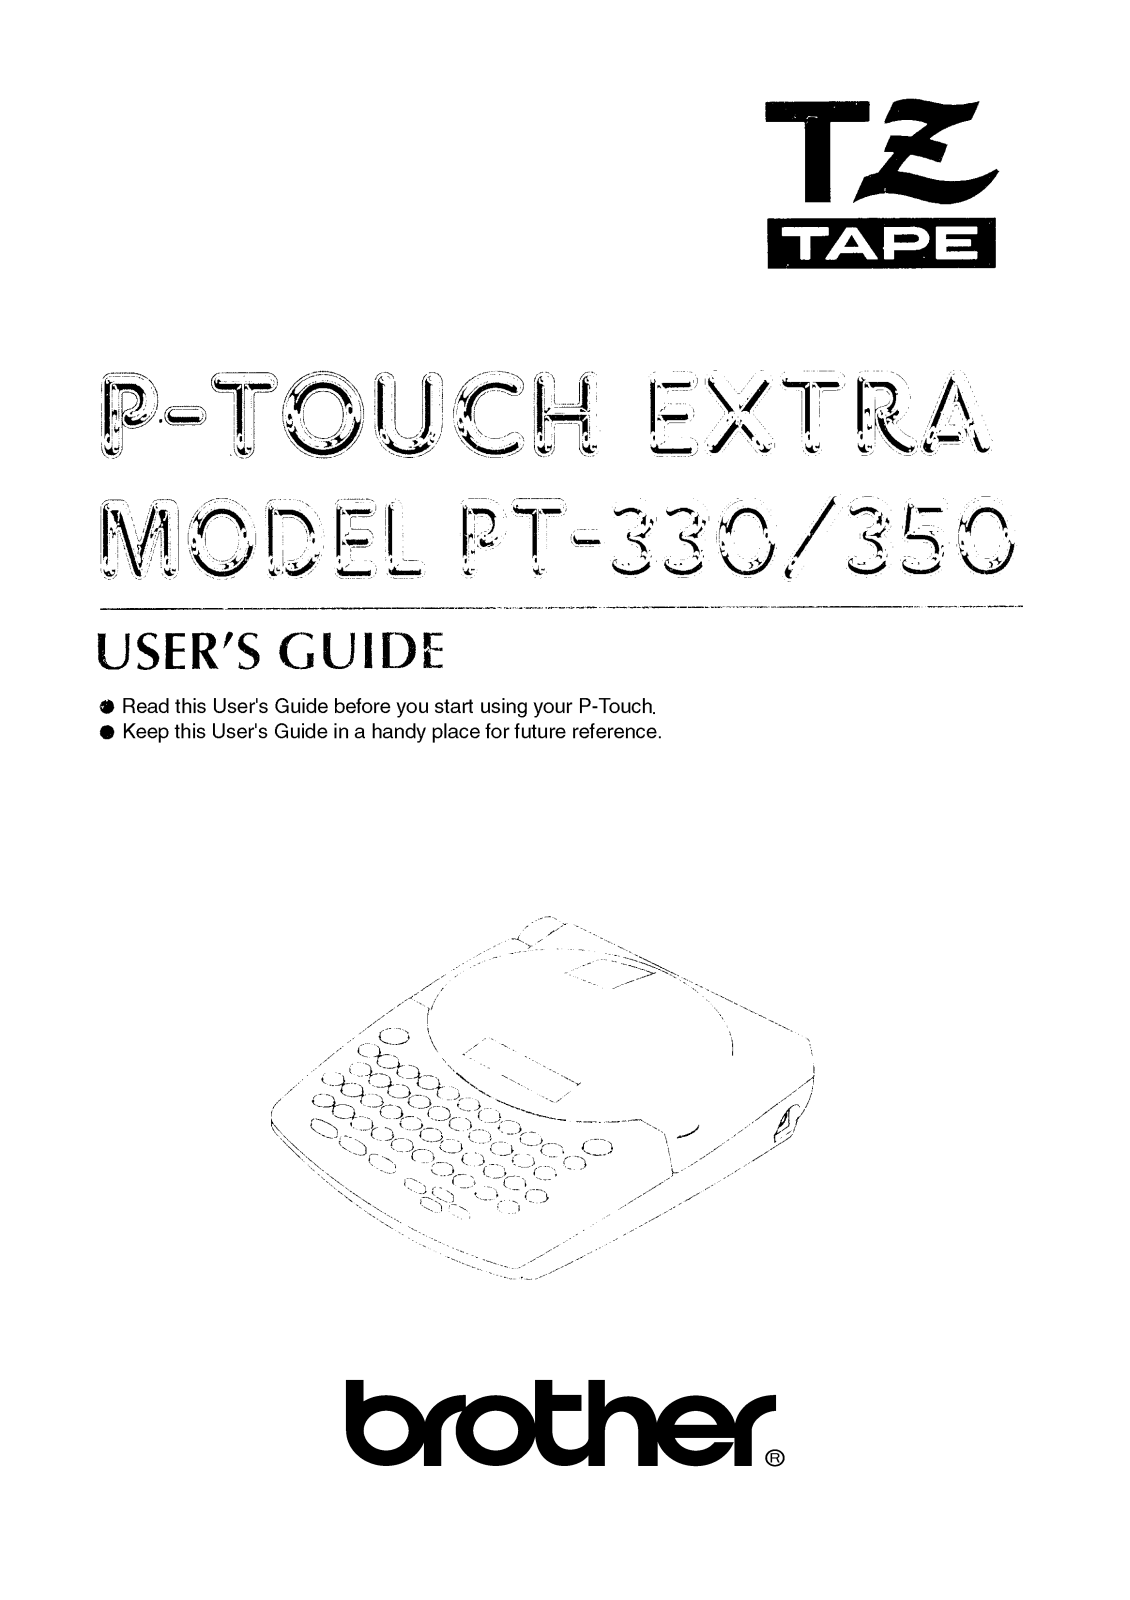 Brother PT-330, PT-350 User Manual